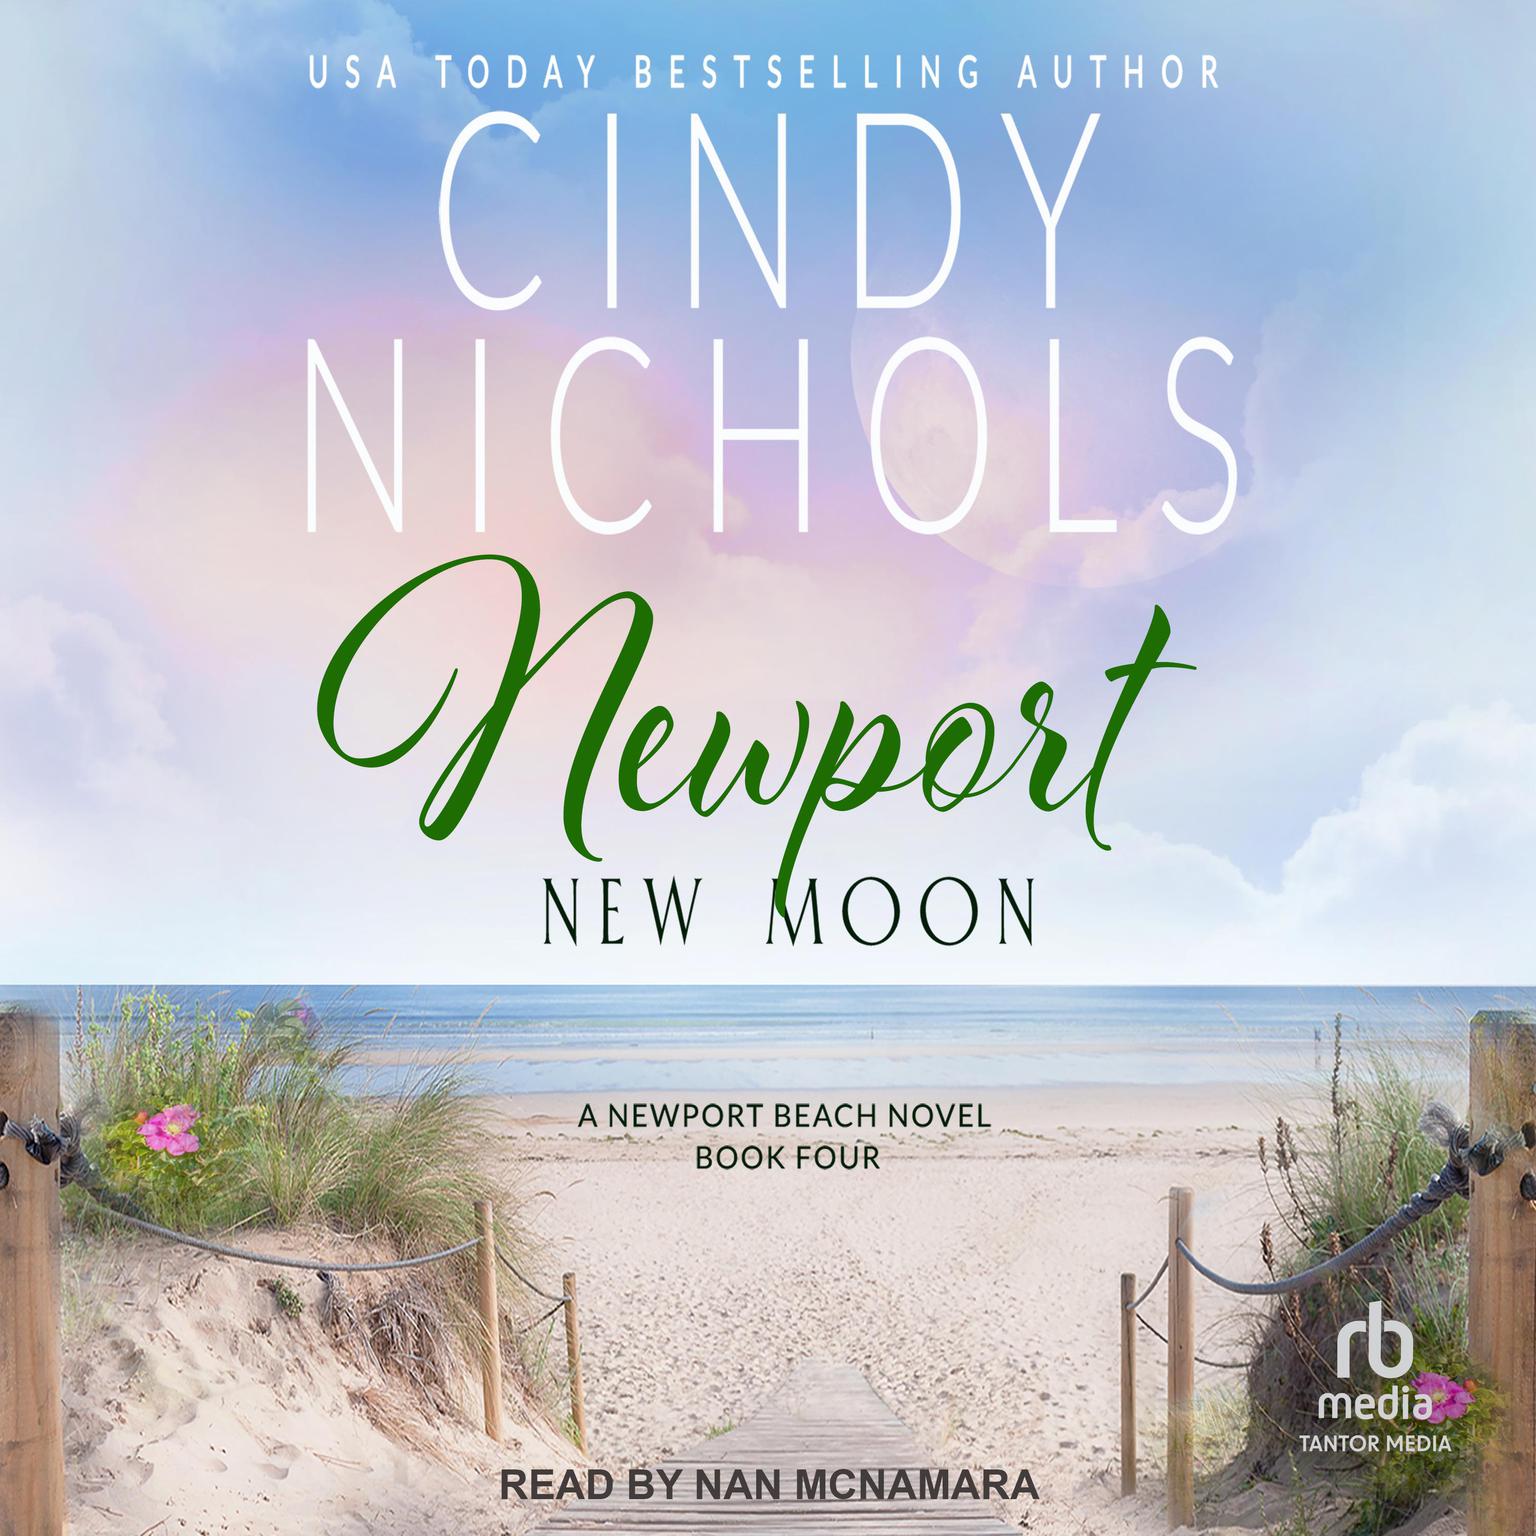 Newport New Moon Audiobook, by Cindy Nichols